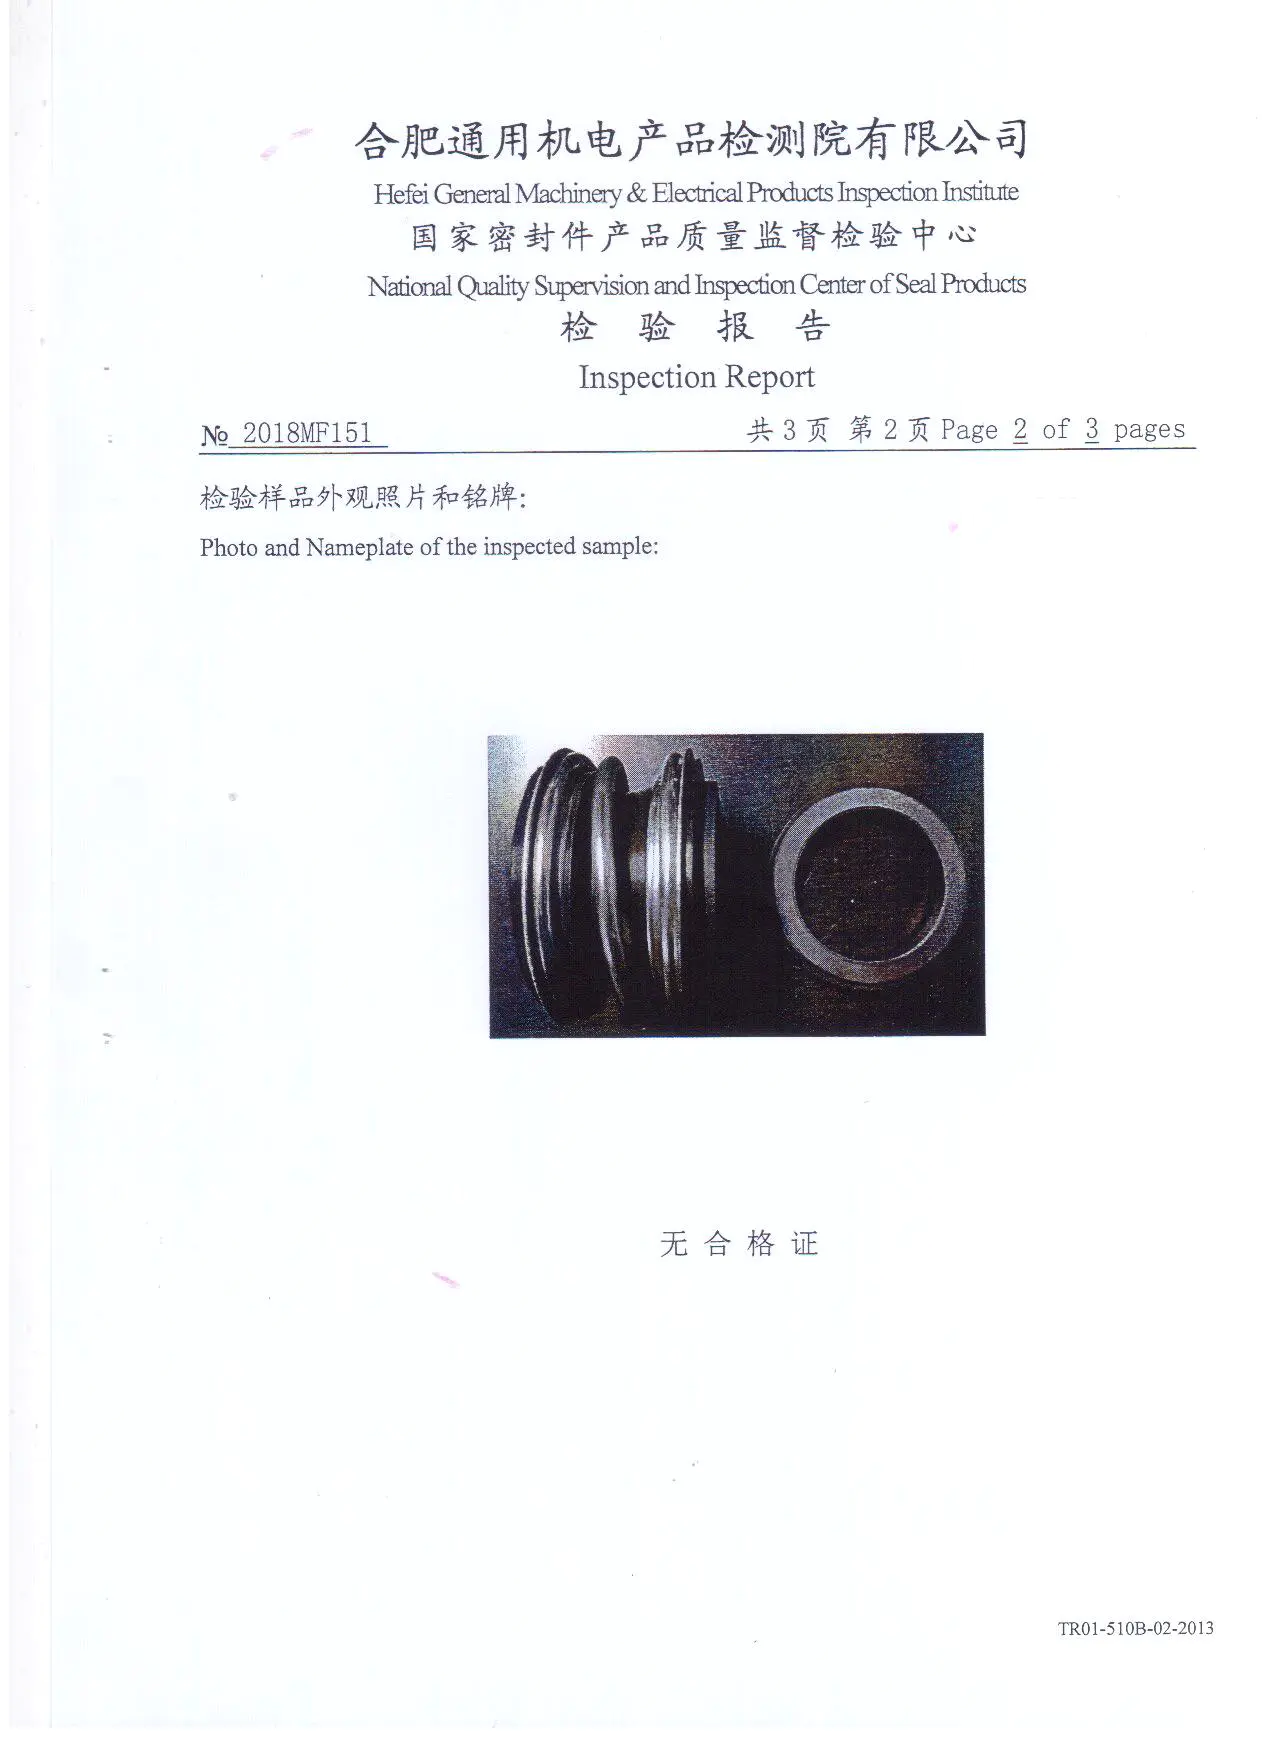 MG1 Mechanical Seal Test Certificate